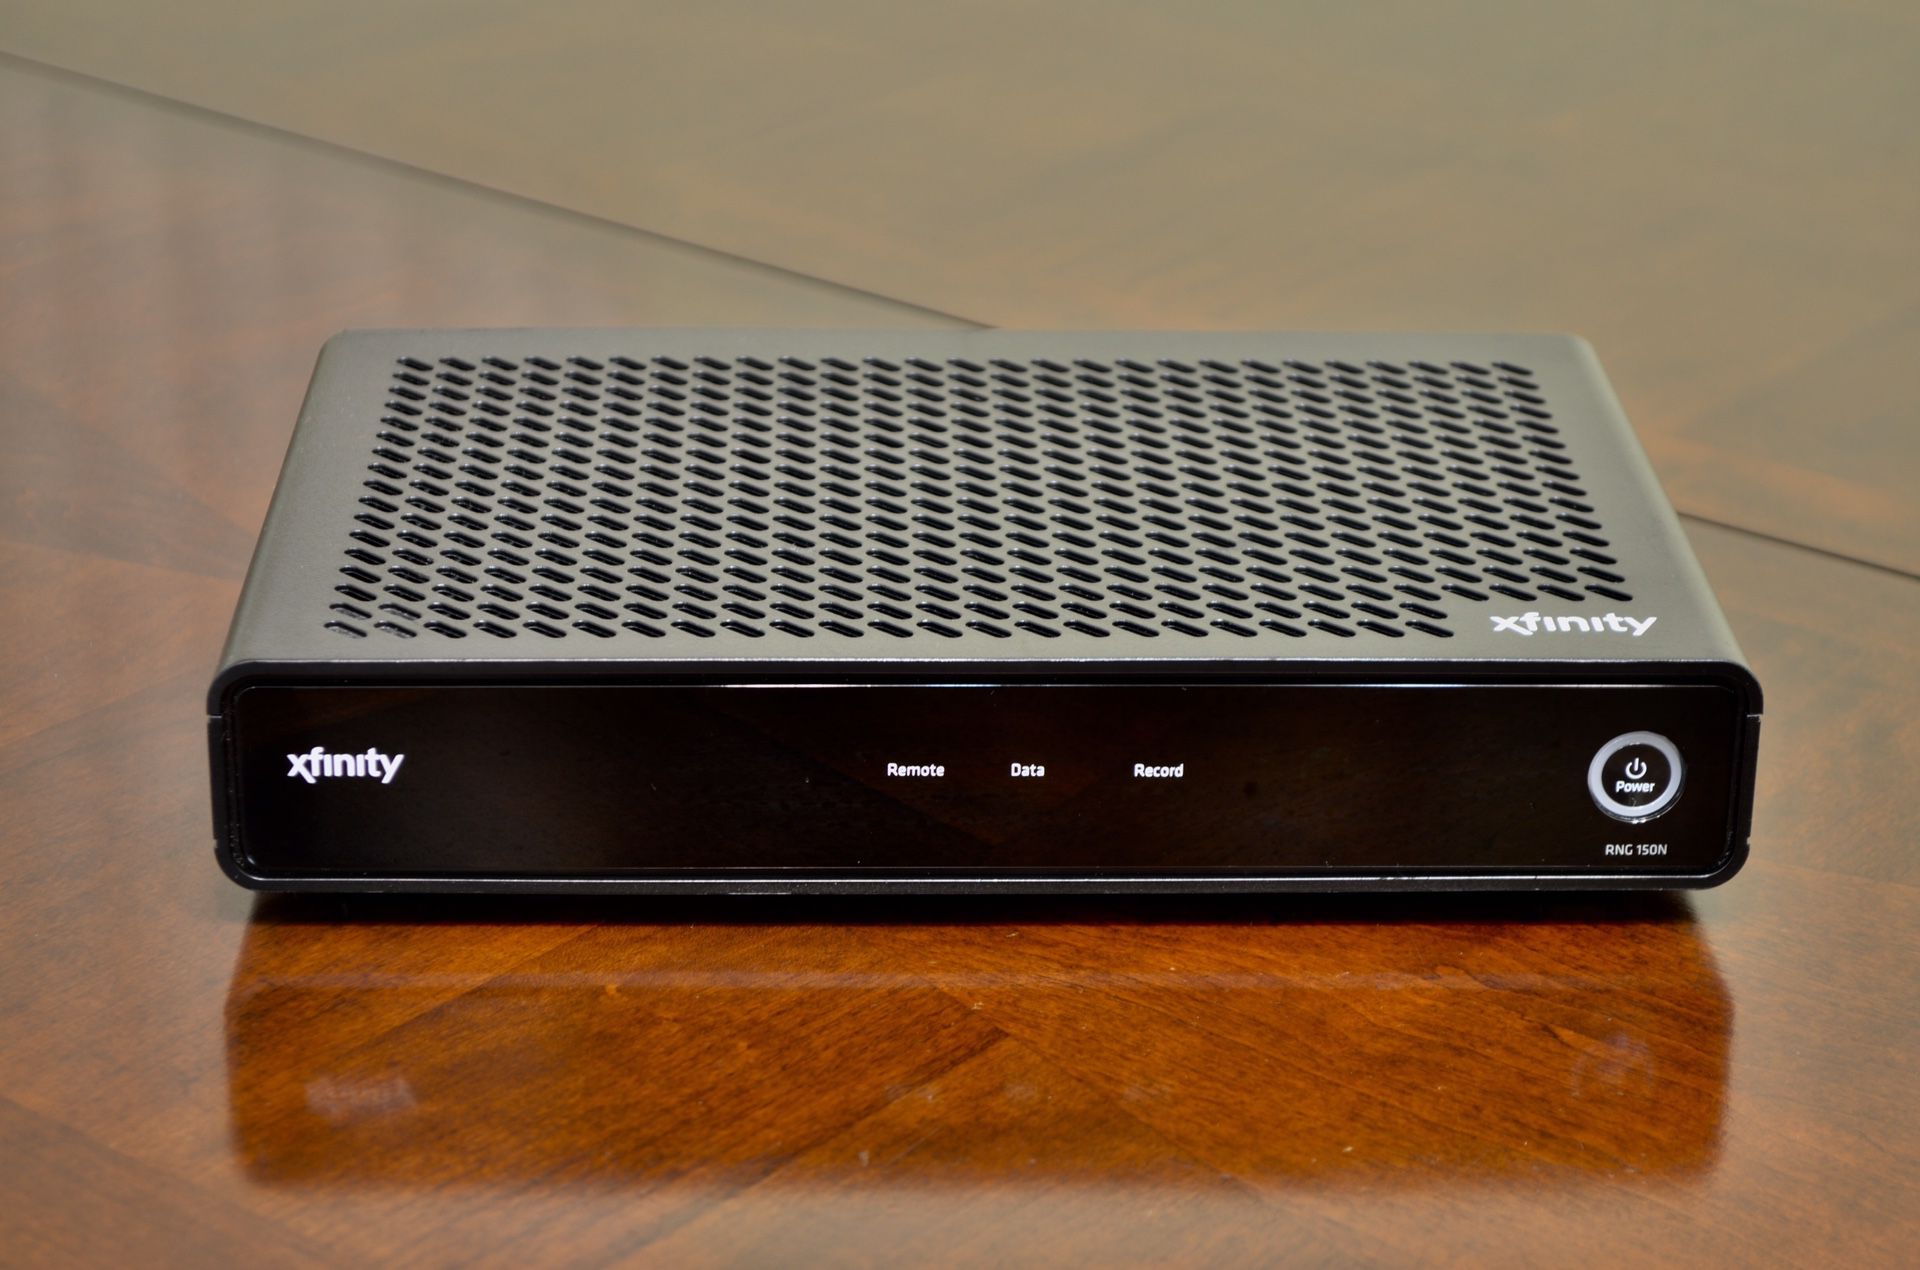 Comcast Xfinity Cable TV Box